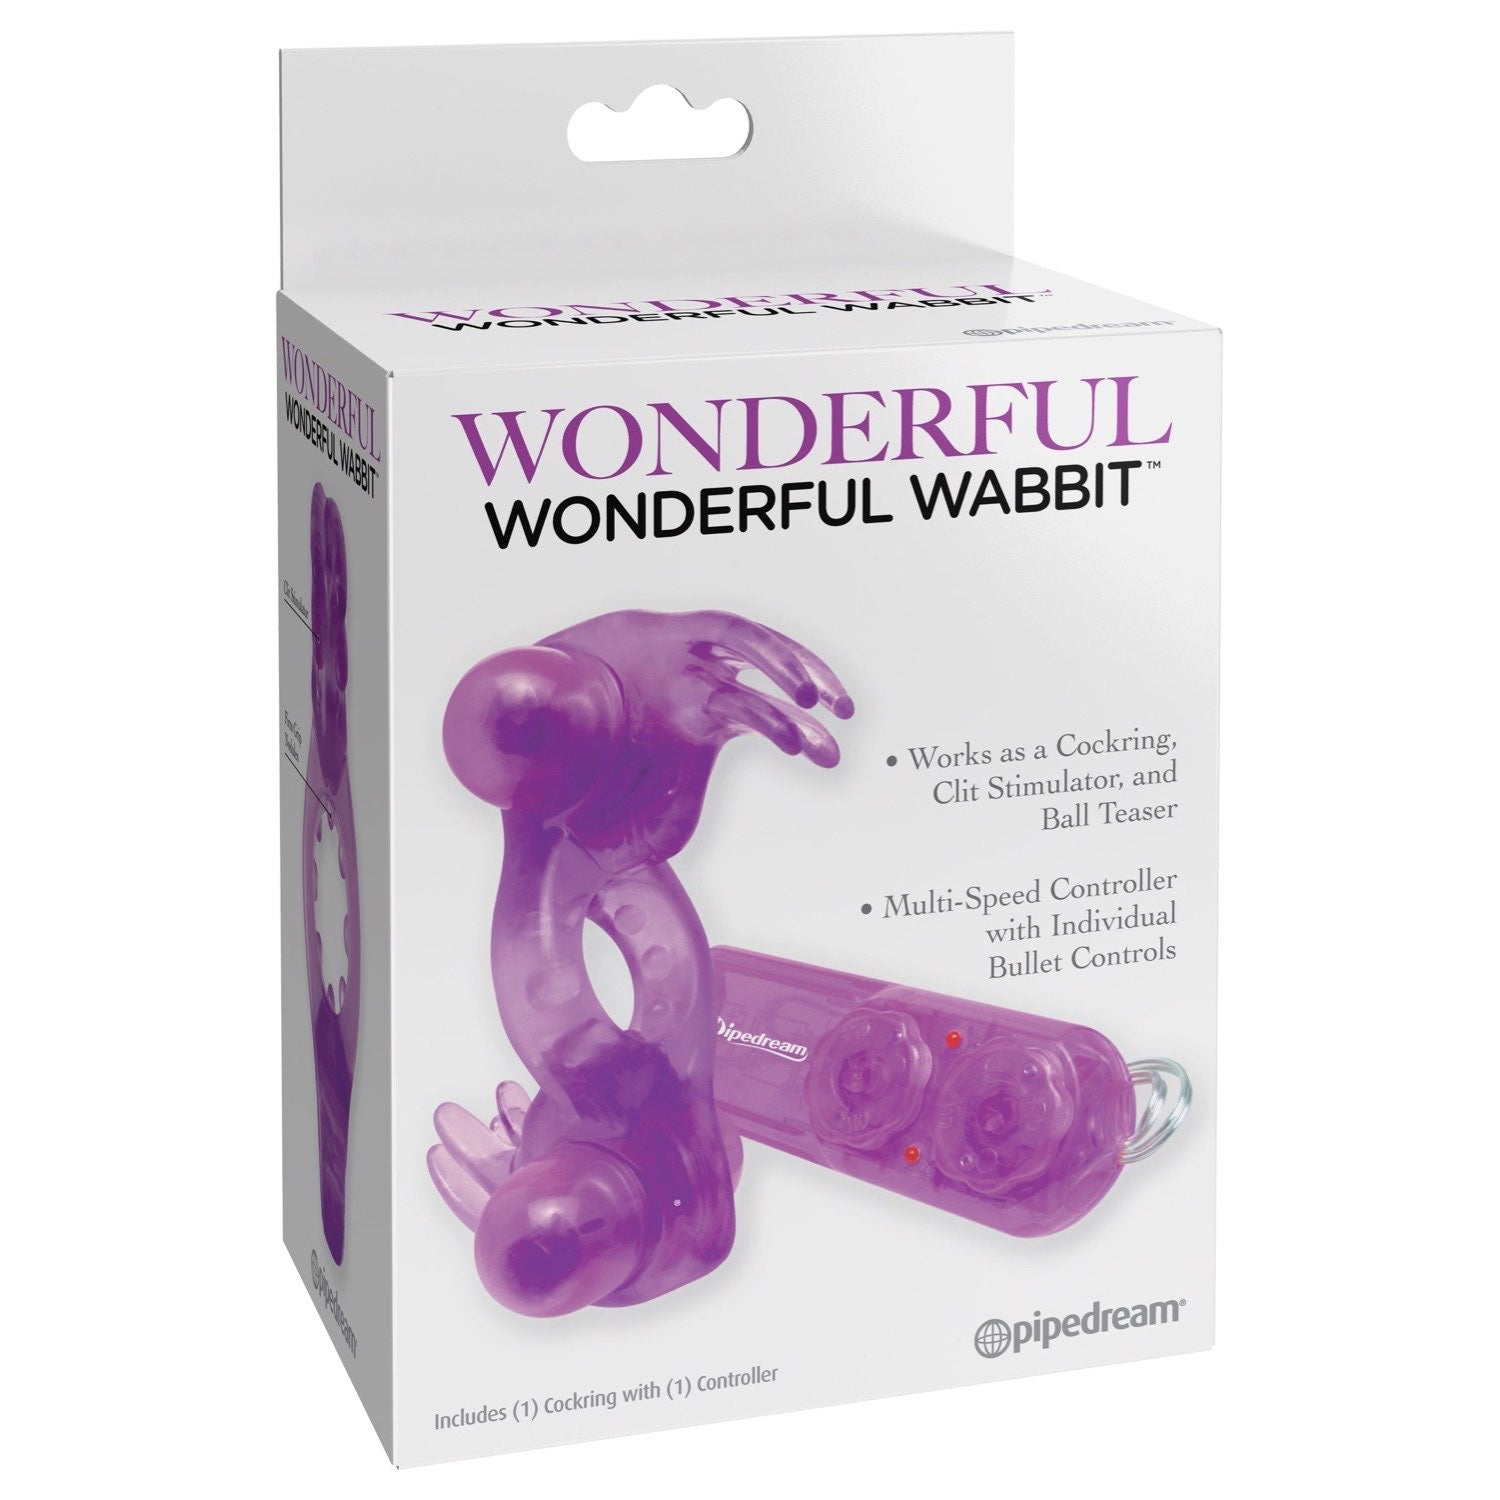  Wonderful Wonderful Wabbit - Purple Dual Vibrating Cock Ring by Pipedream